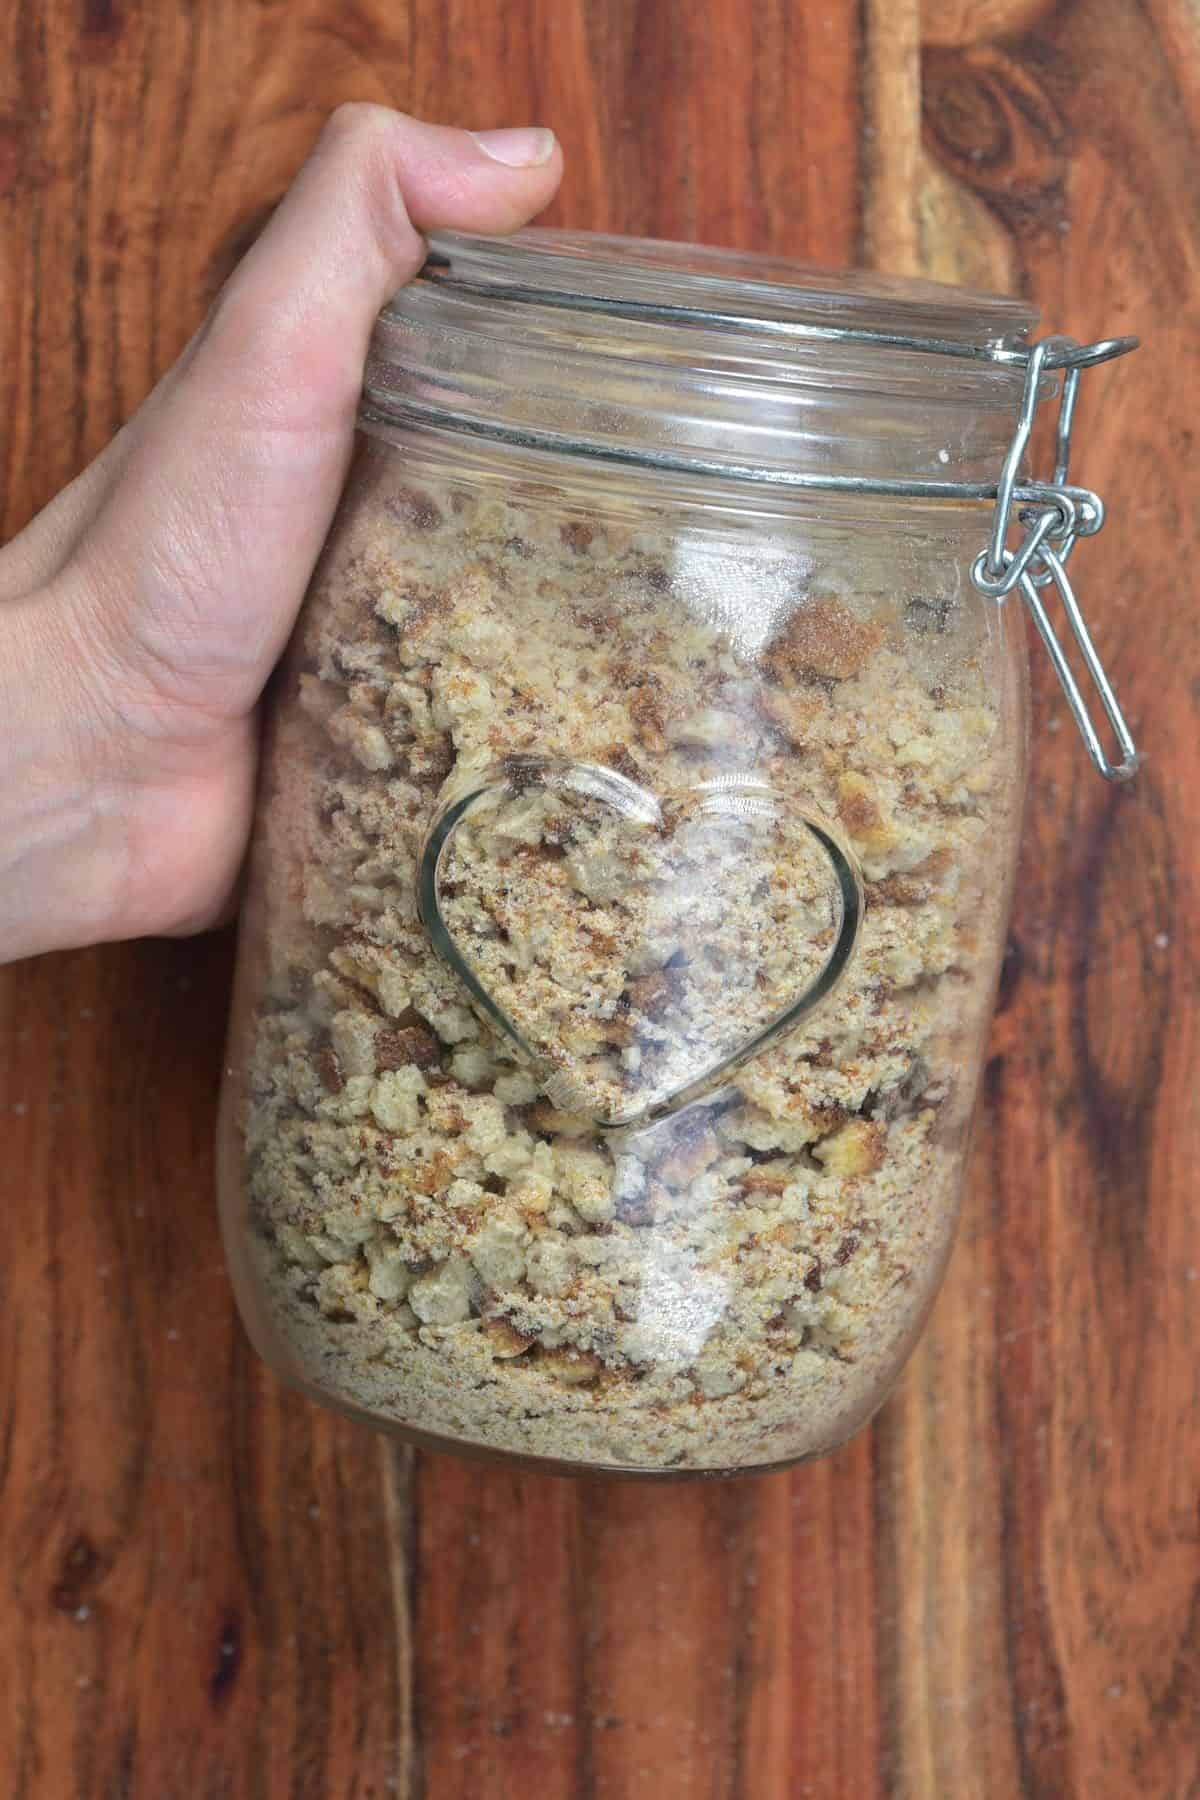 Breadcrumbs in a closed jar